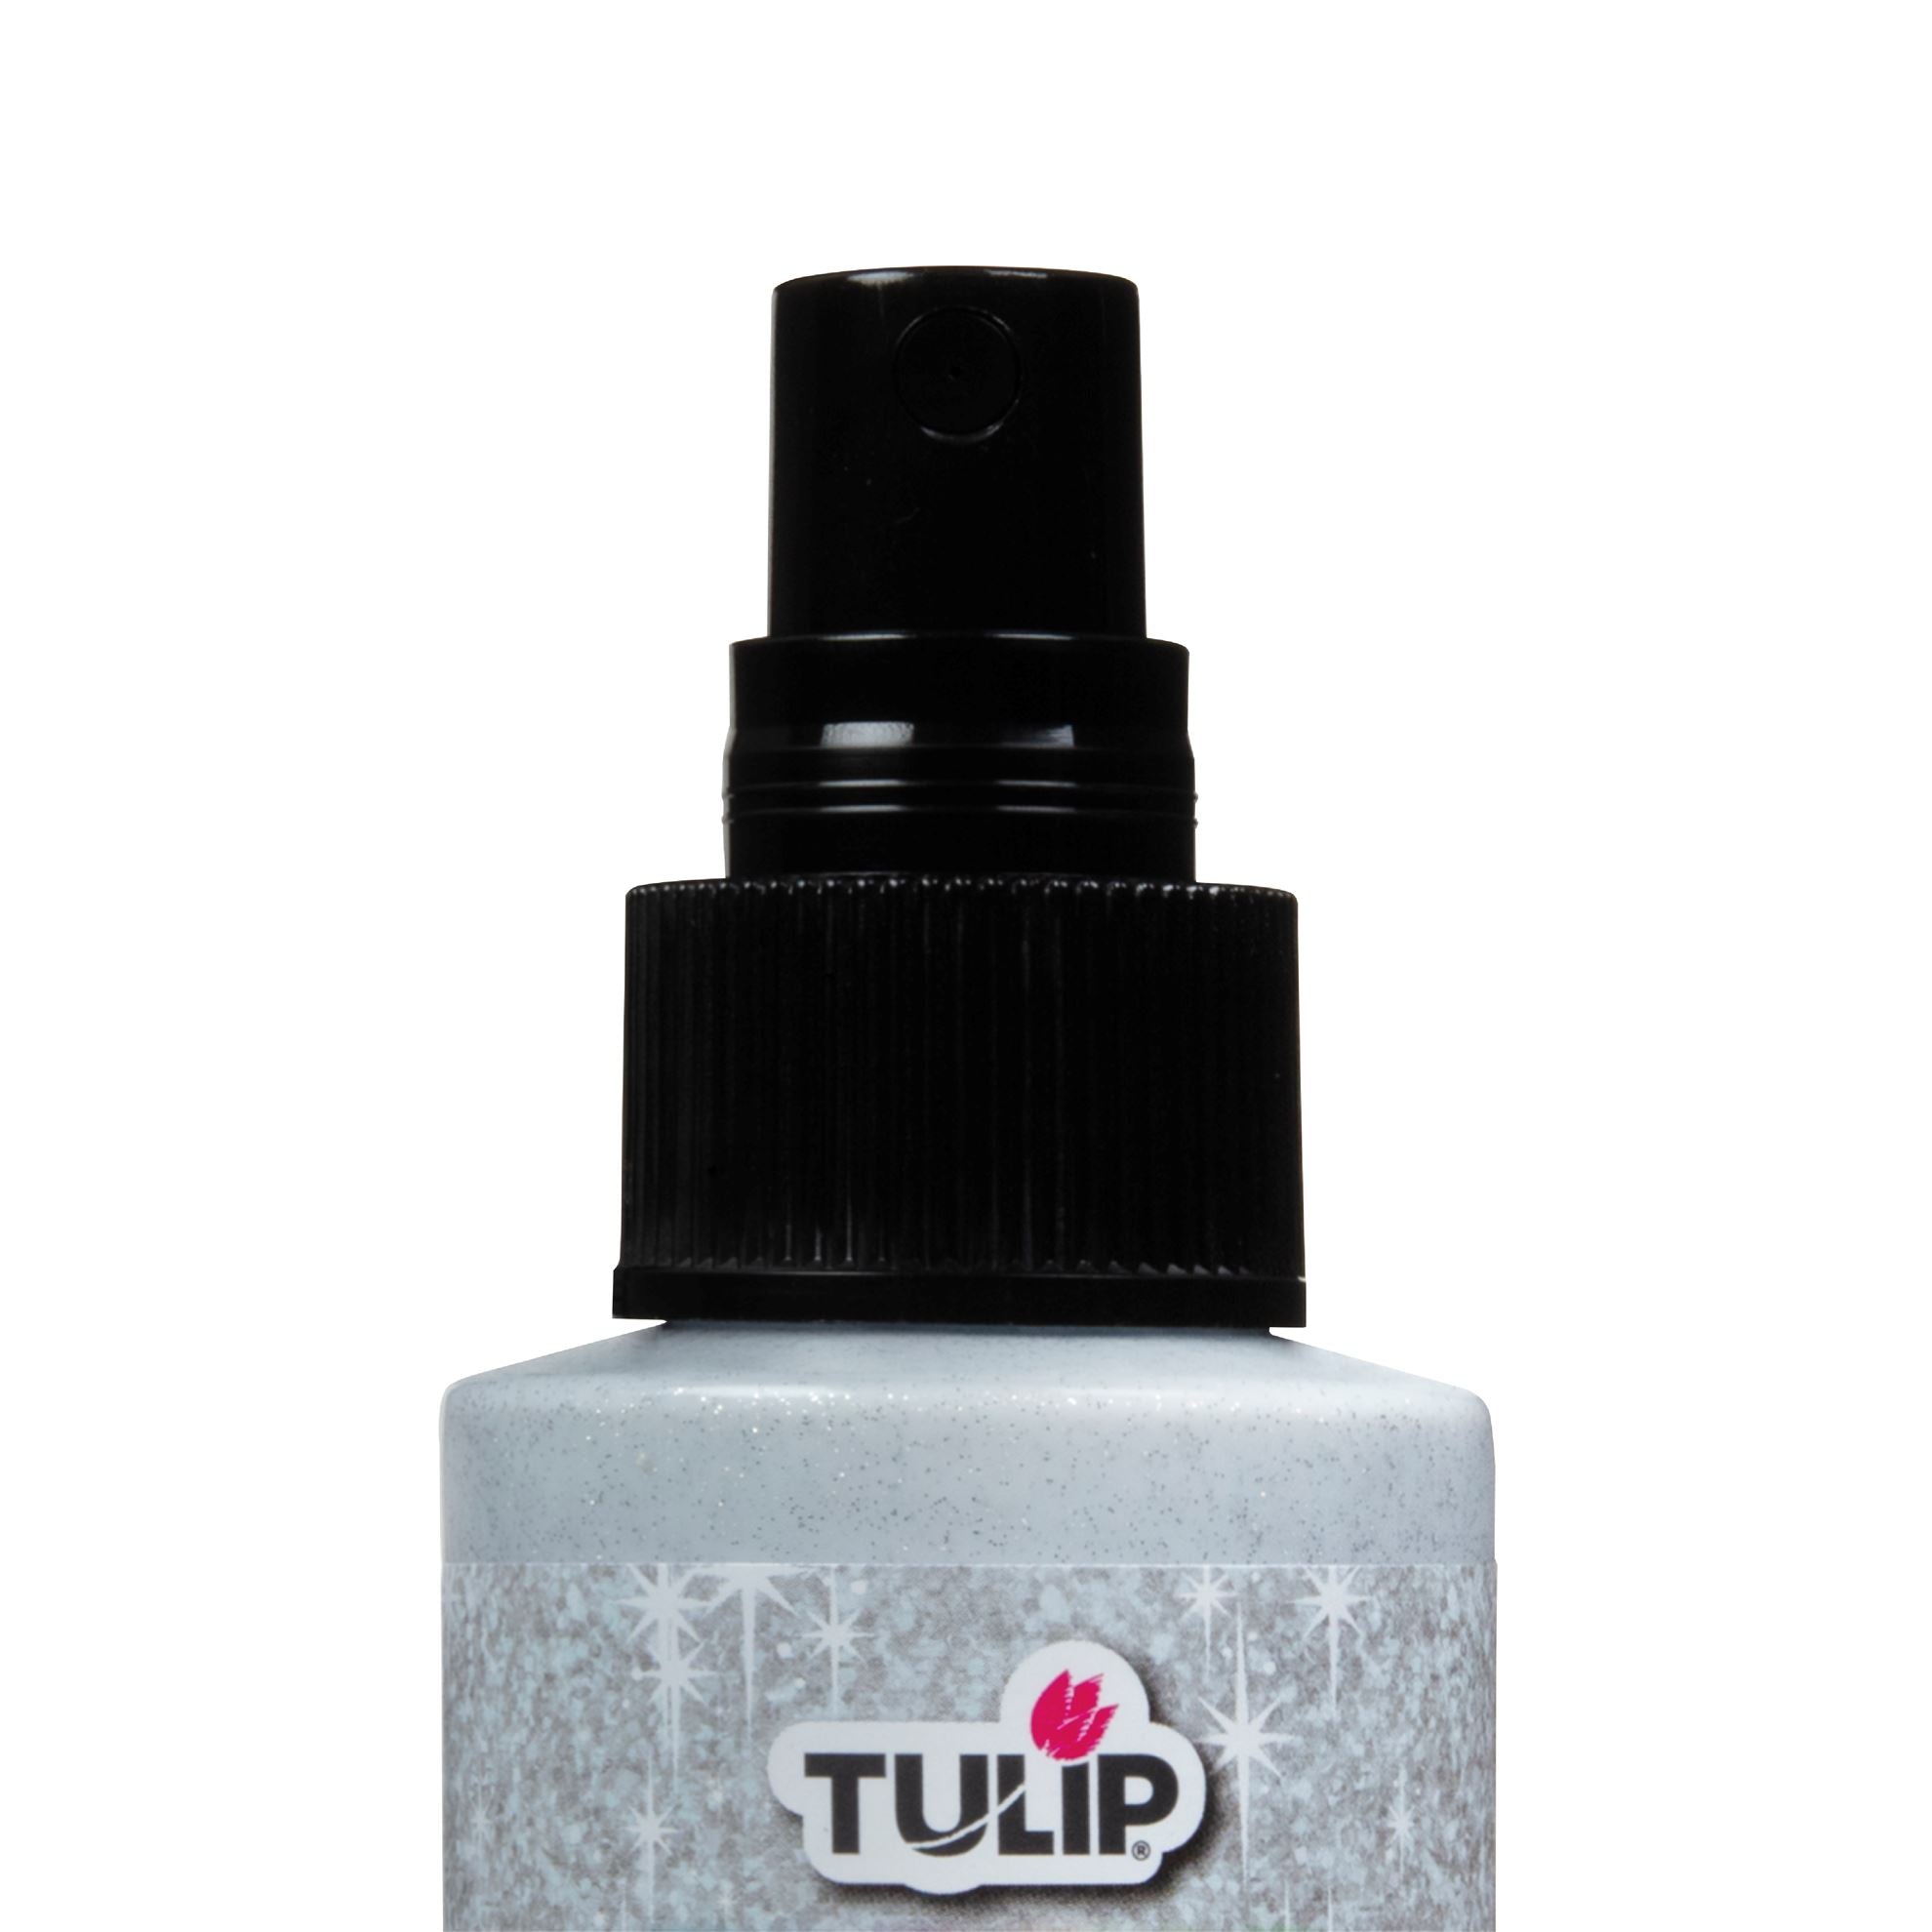 Tulip Fabric Spray Paint Silver Glitter 4 fl. oz. - 4